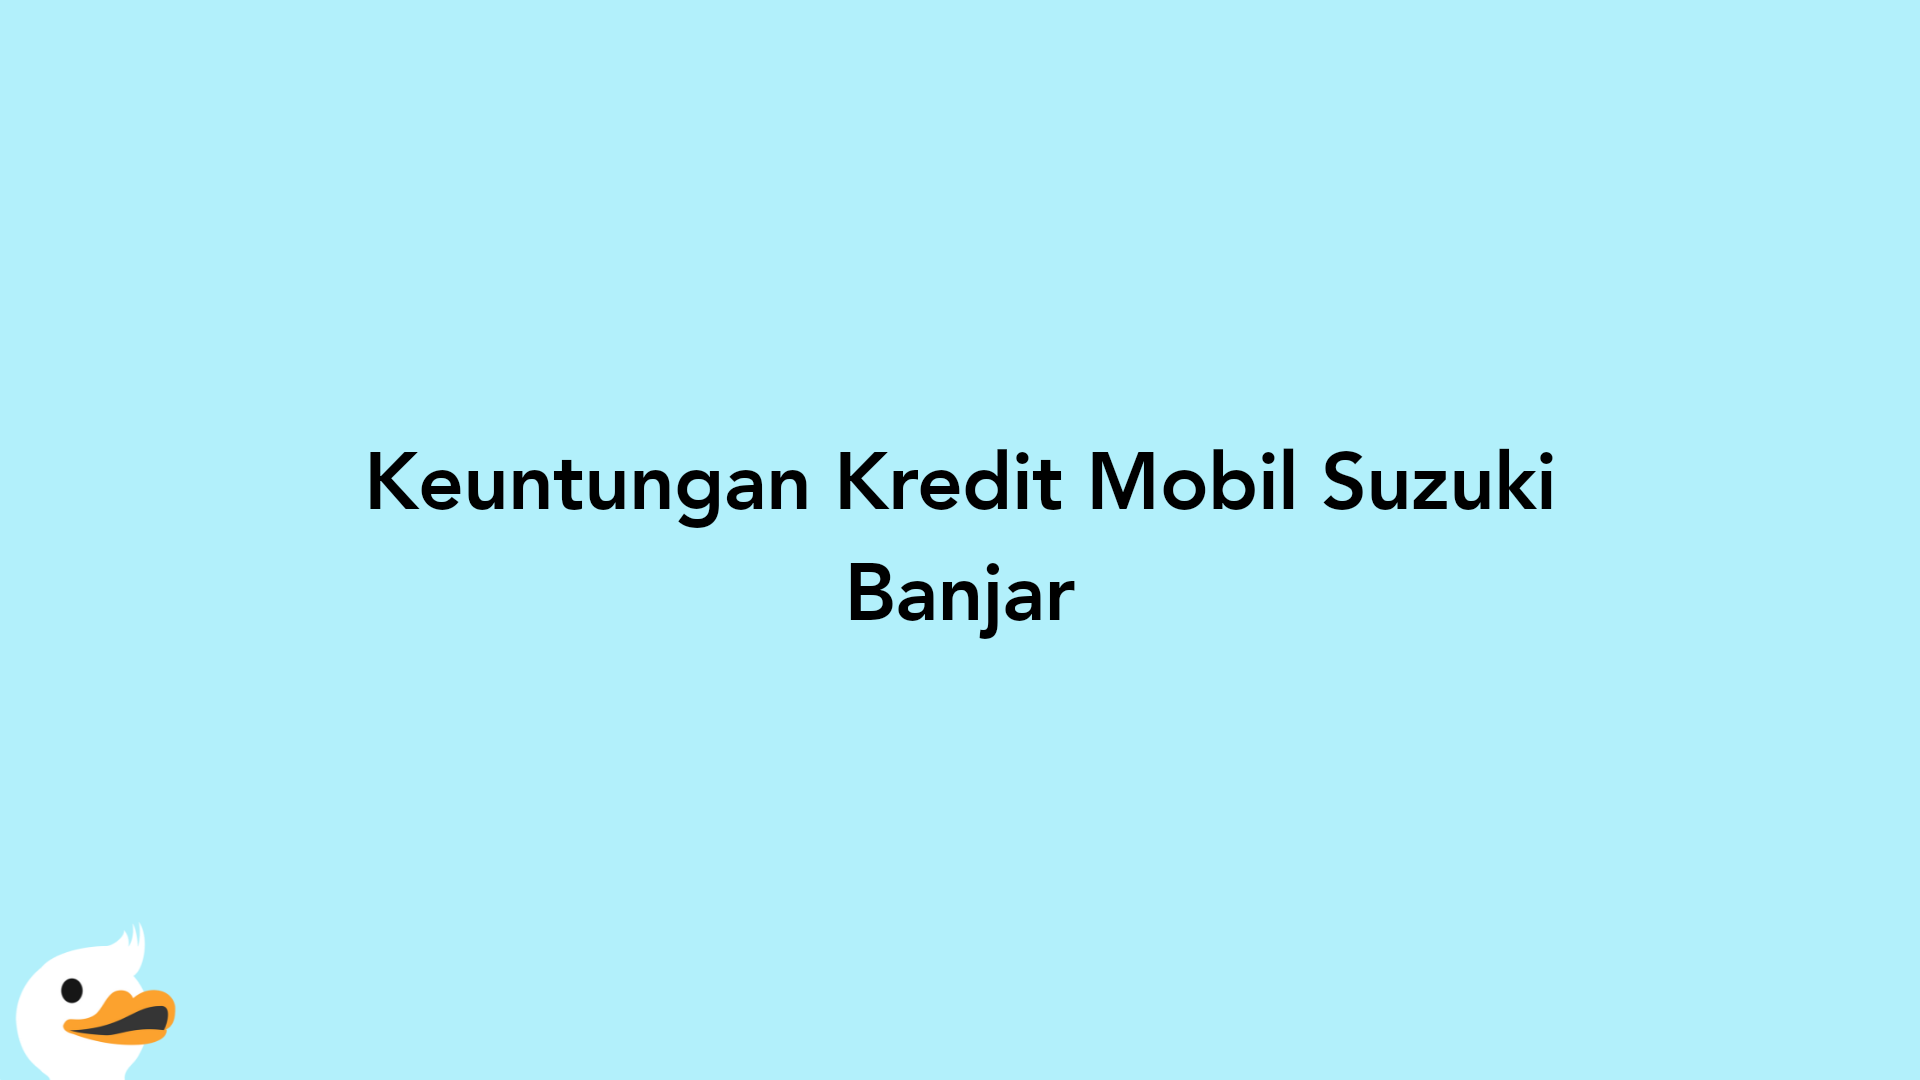 Keuntungan Kredit Mobil Suzuki Banjar